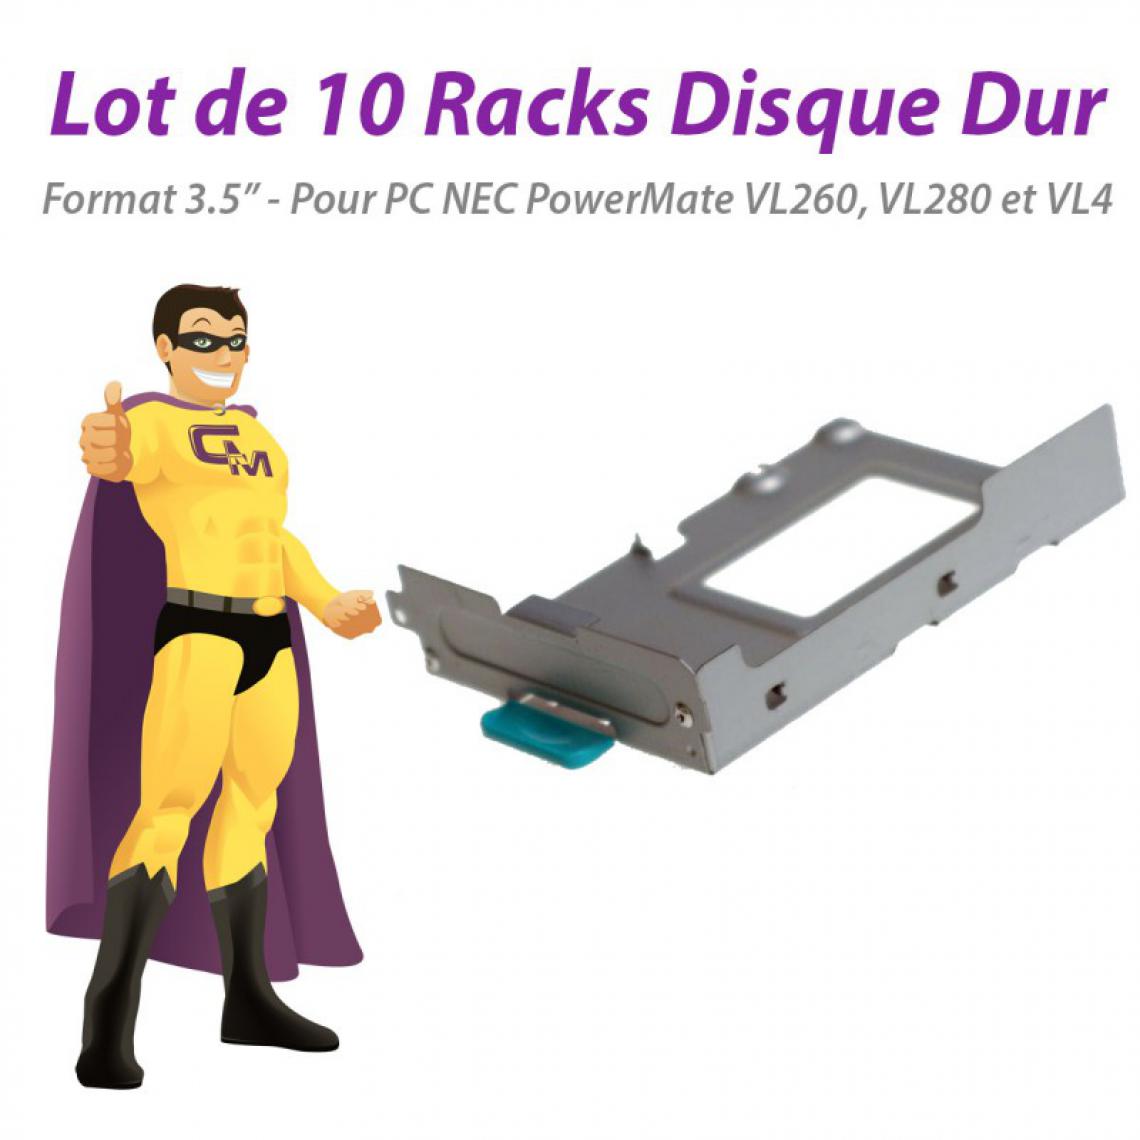 Nec - Lot x10 Racks Disque Dur 3,5" NEC PowerMate VL260 VL280 VL4 DT SATA - Rack amovible